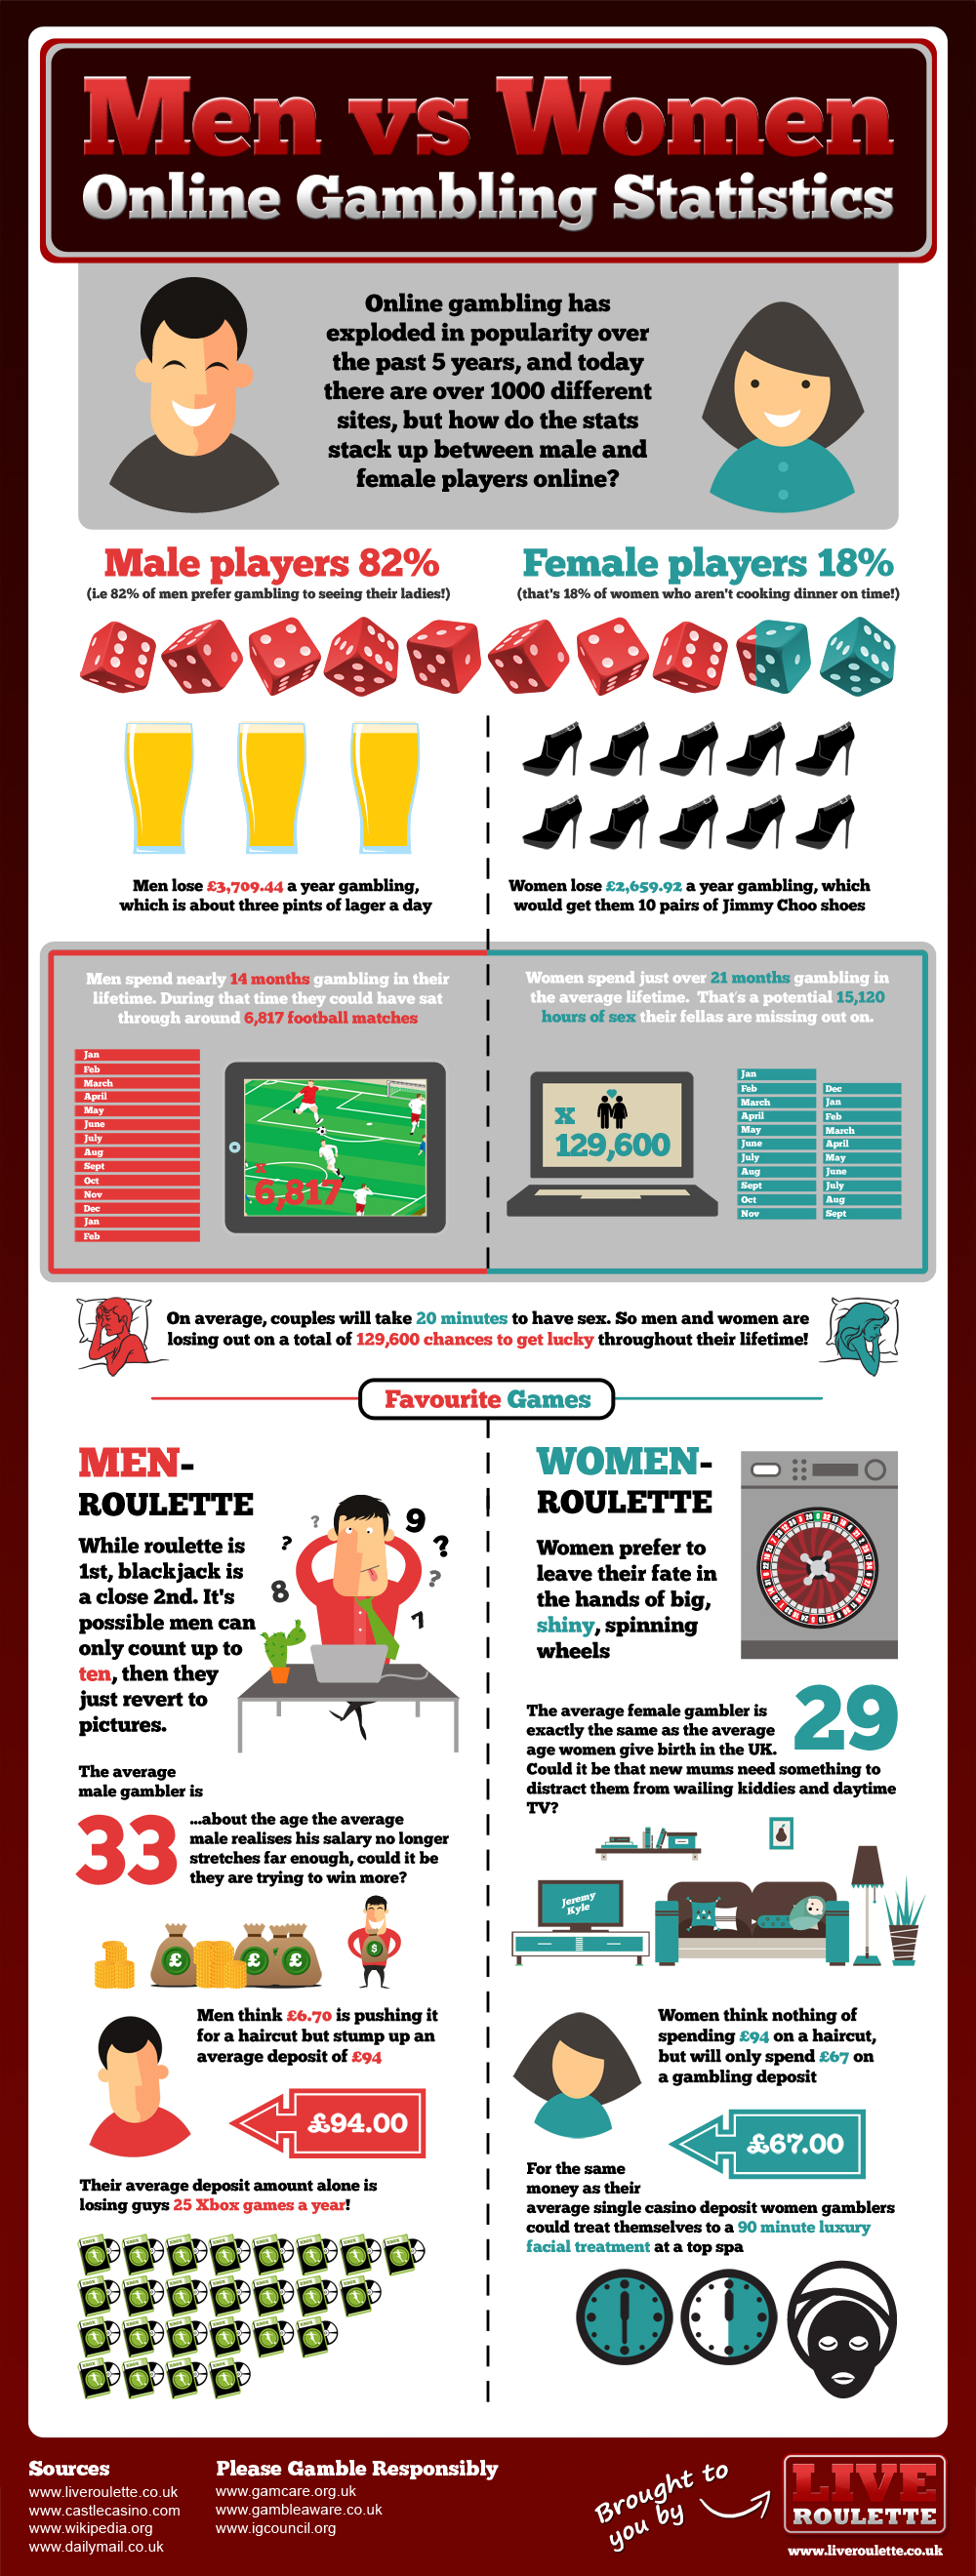 Men vs Women Online Gambling Statistics Infographic